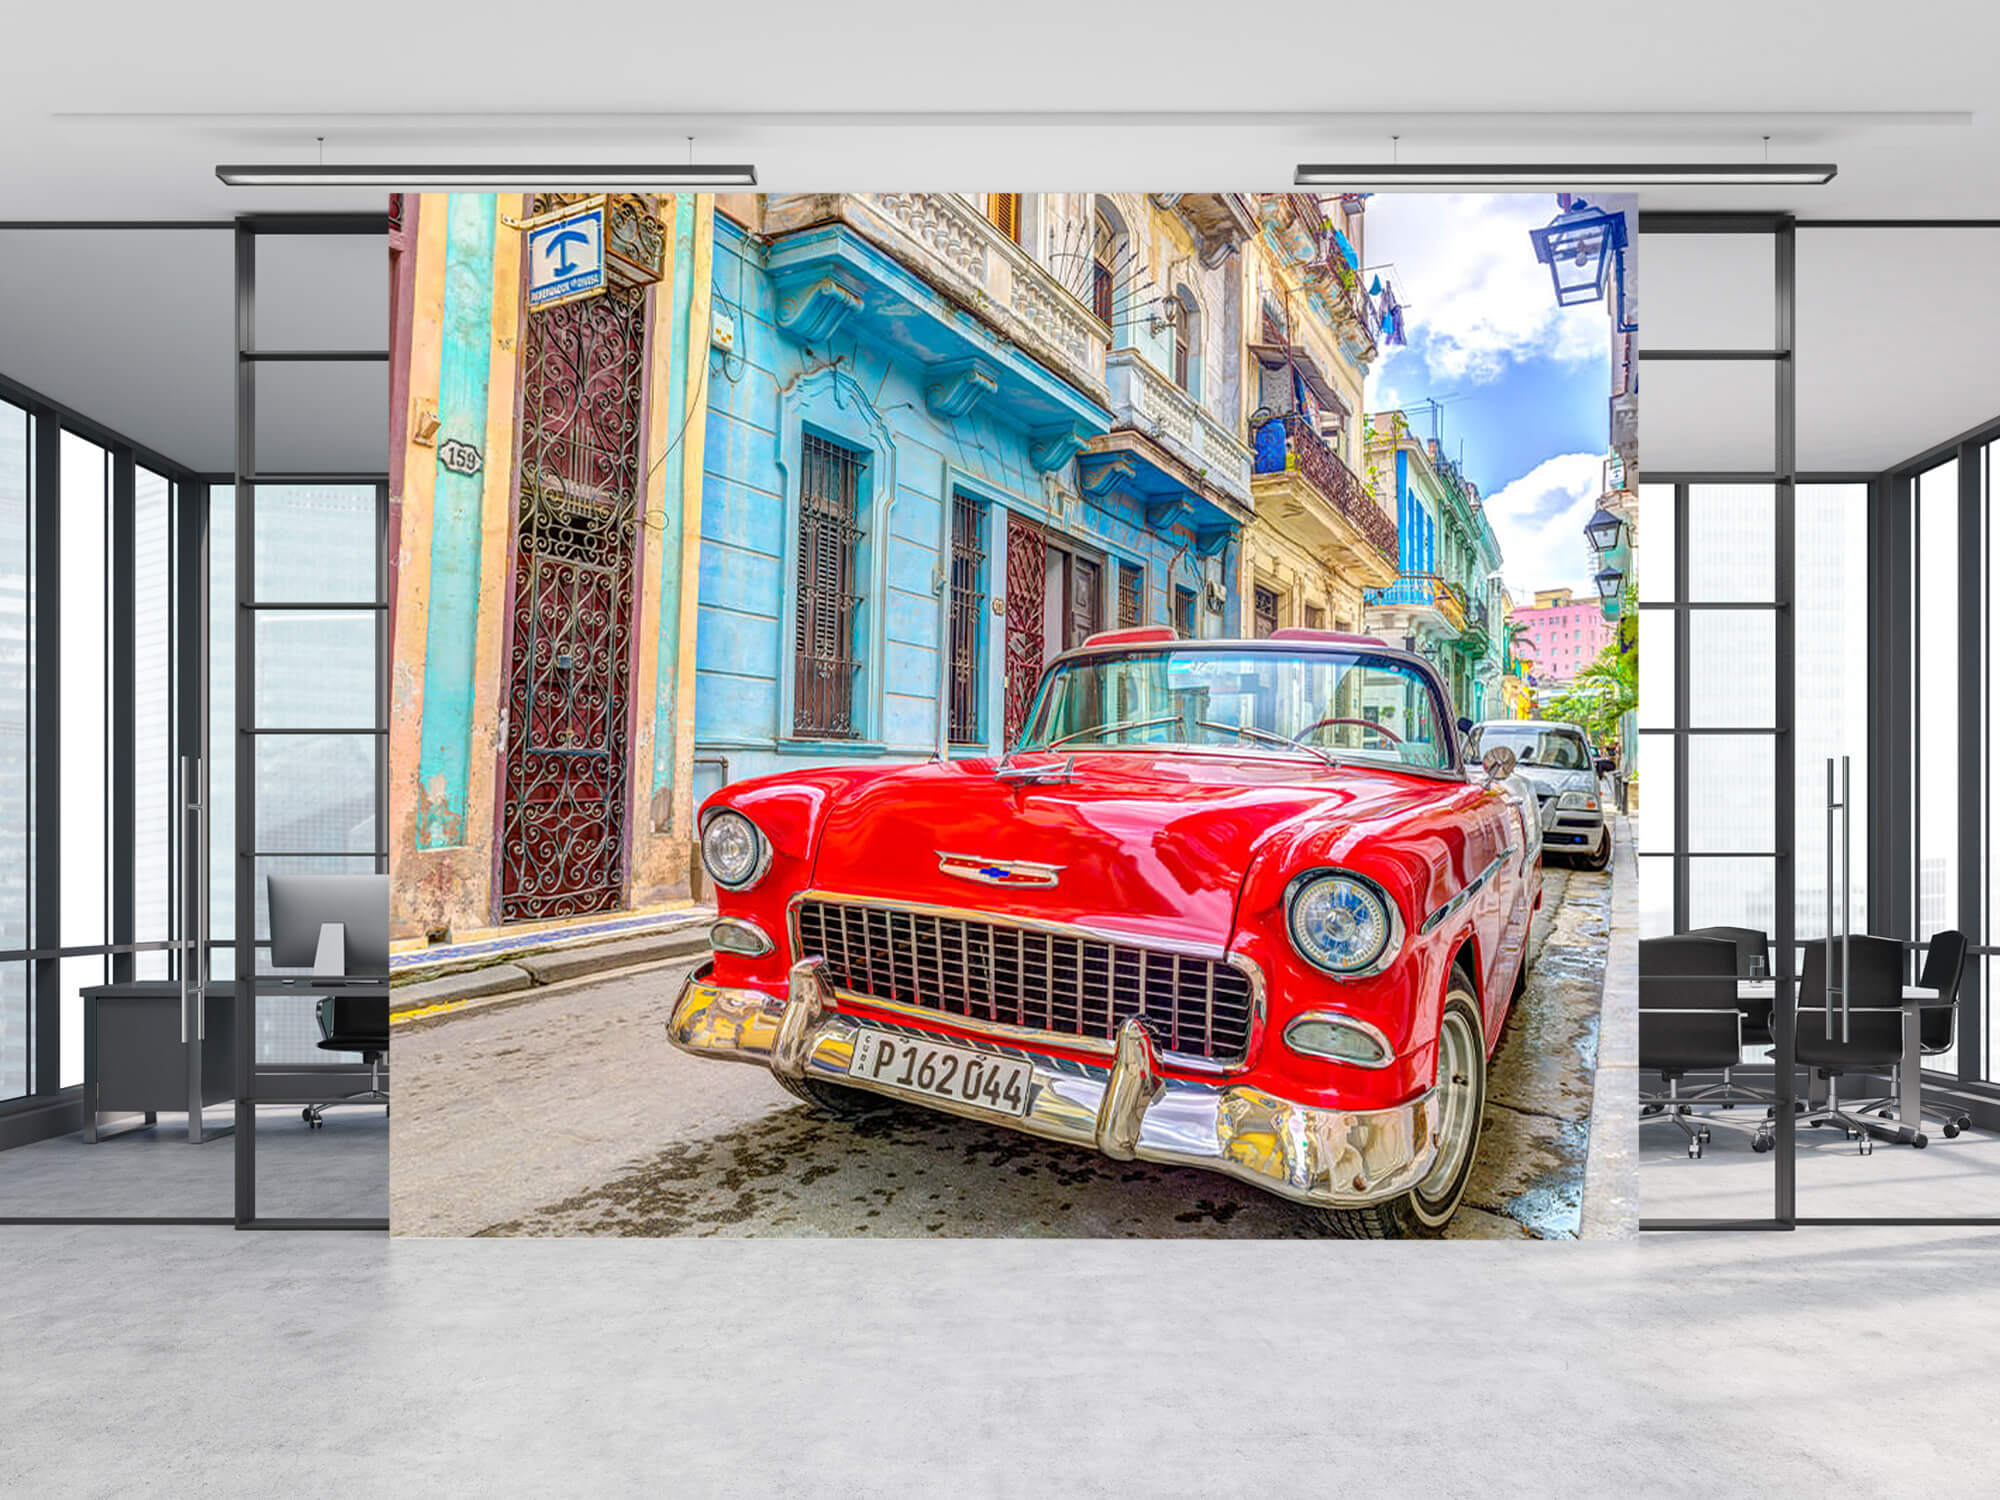  Vintage auto in Havana 10